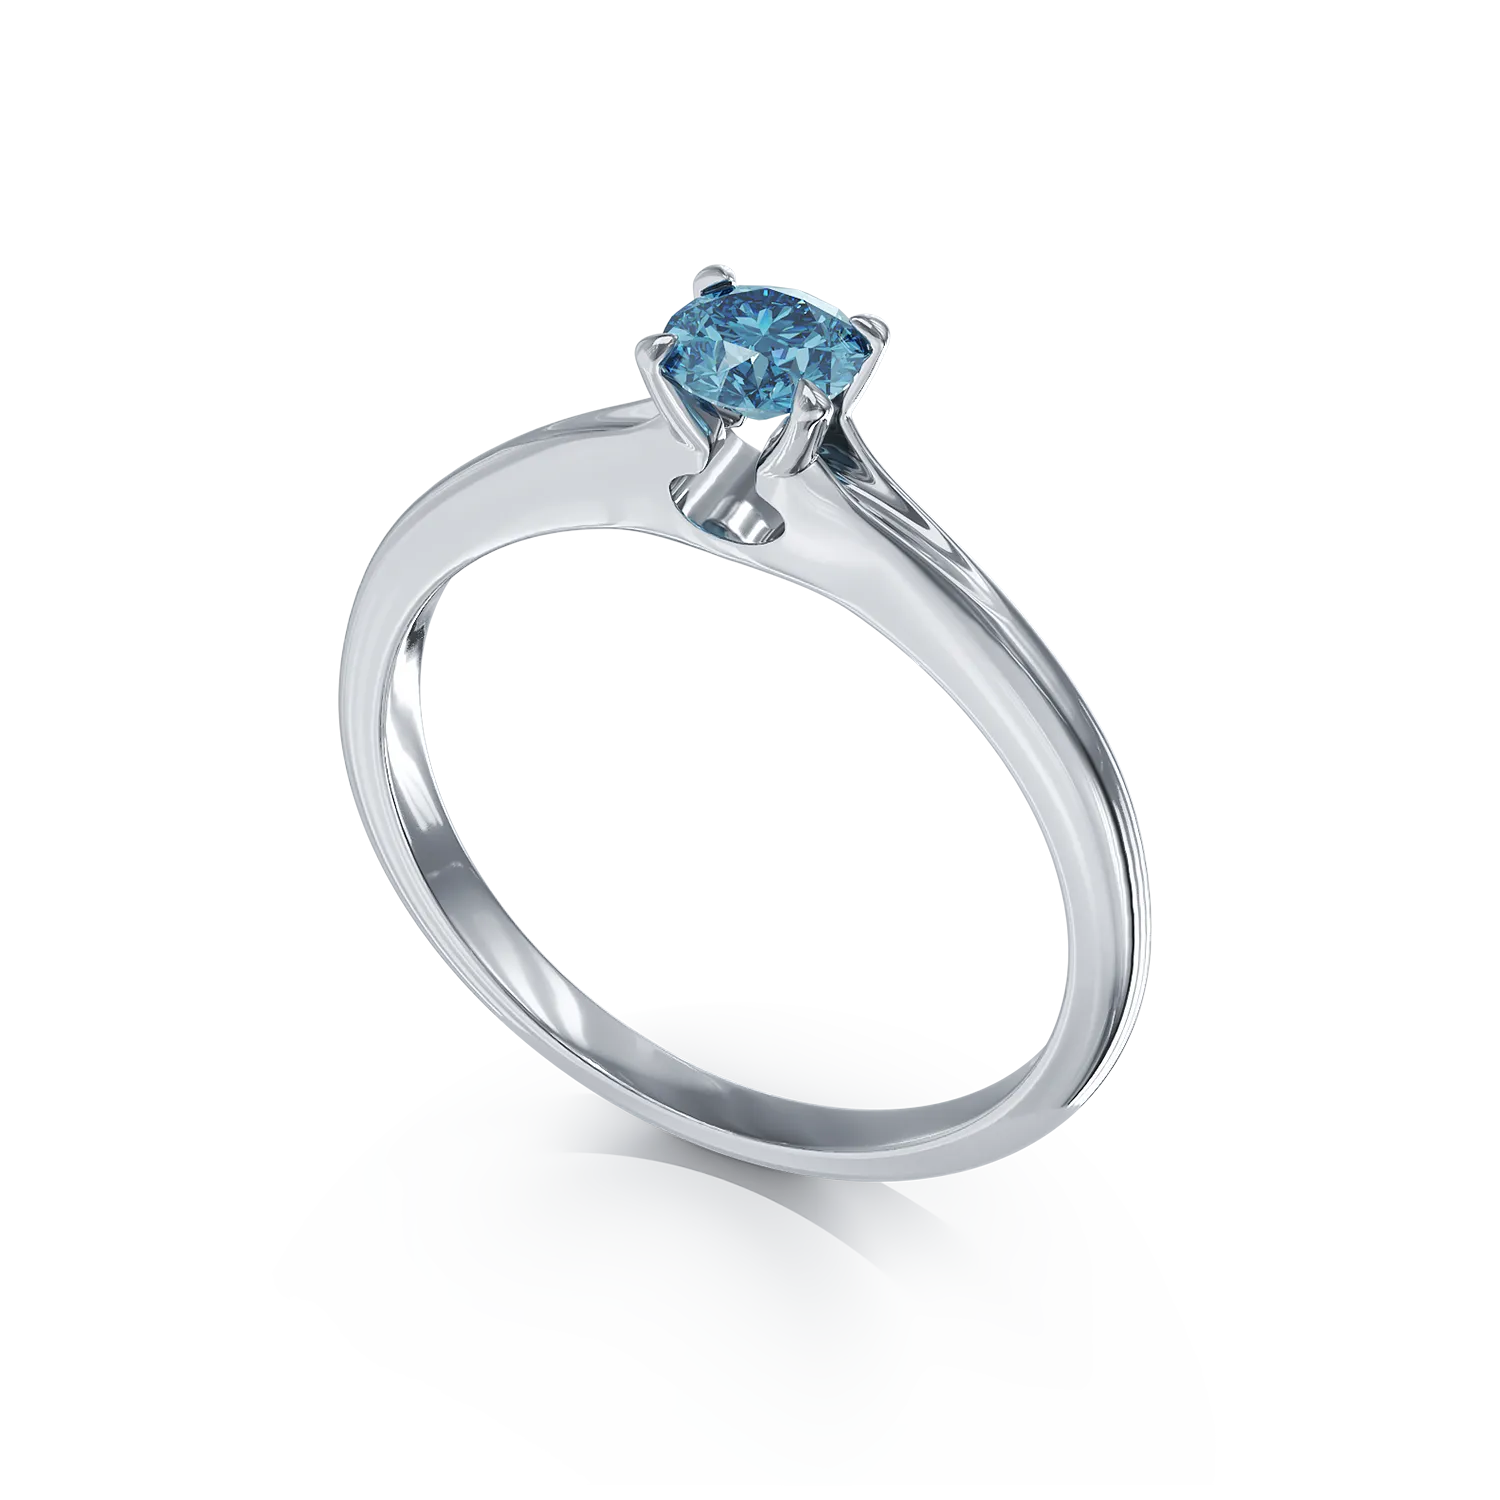 Inel de logodna din aur alb de 18K cu un diamant solitaire albastru de 0.22ct